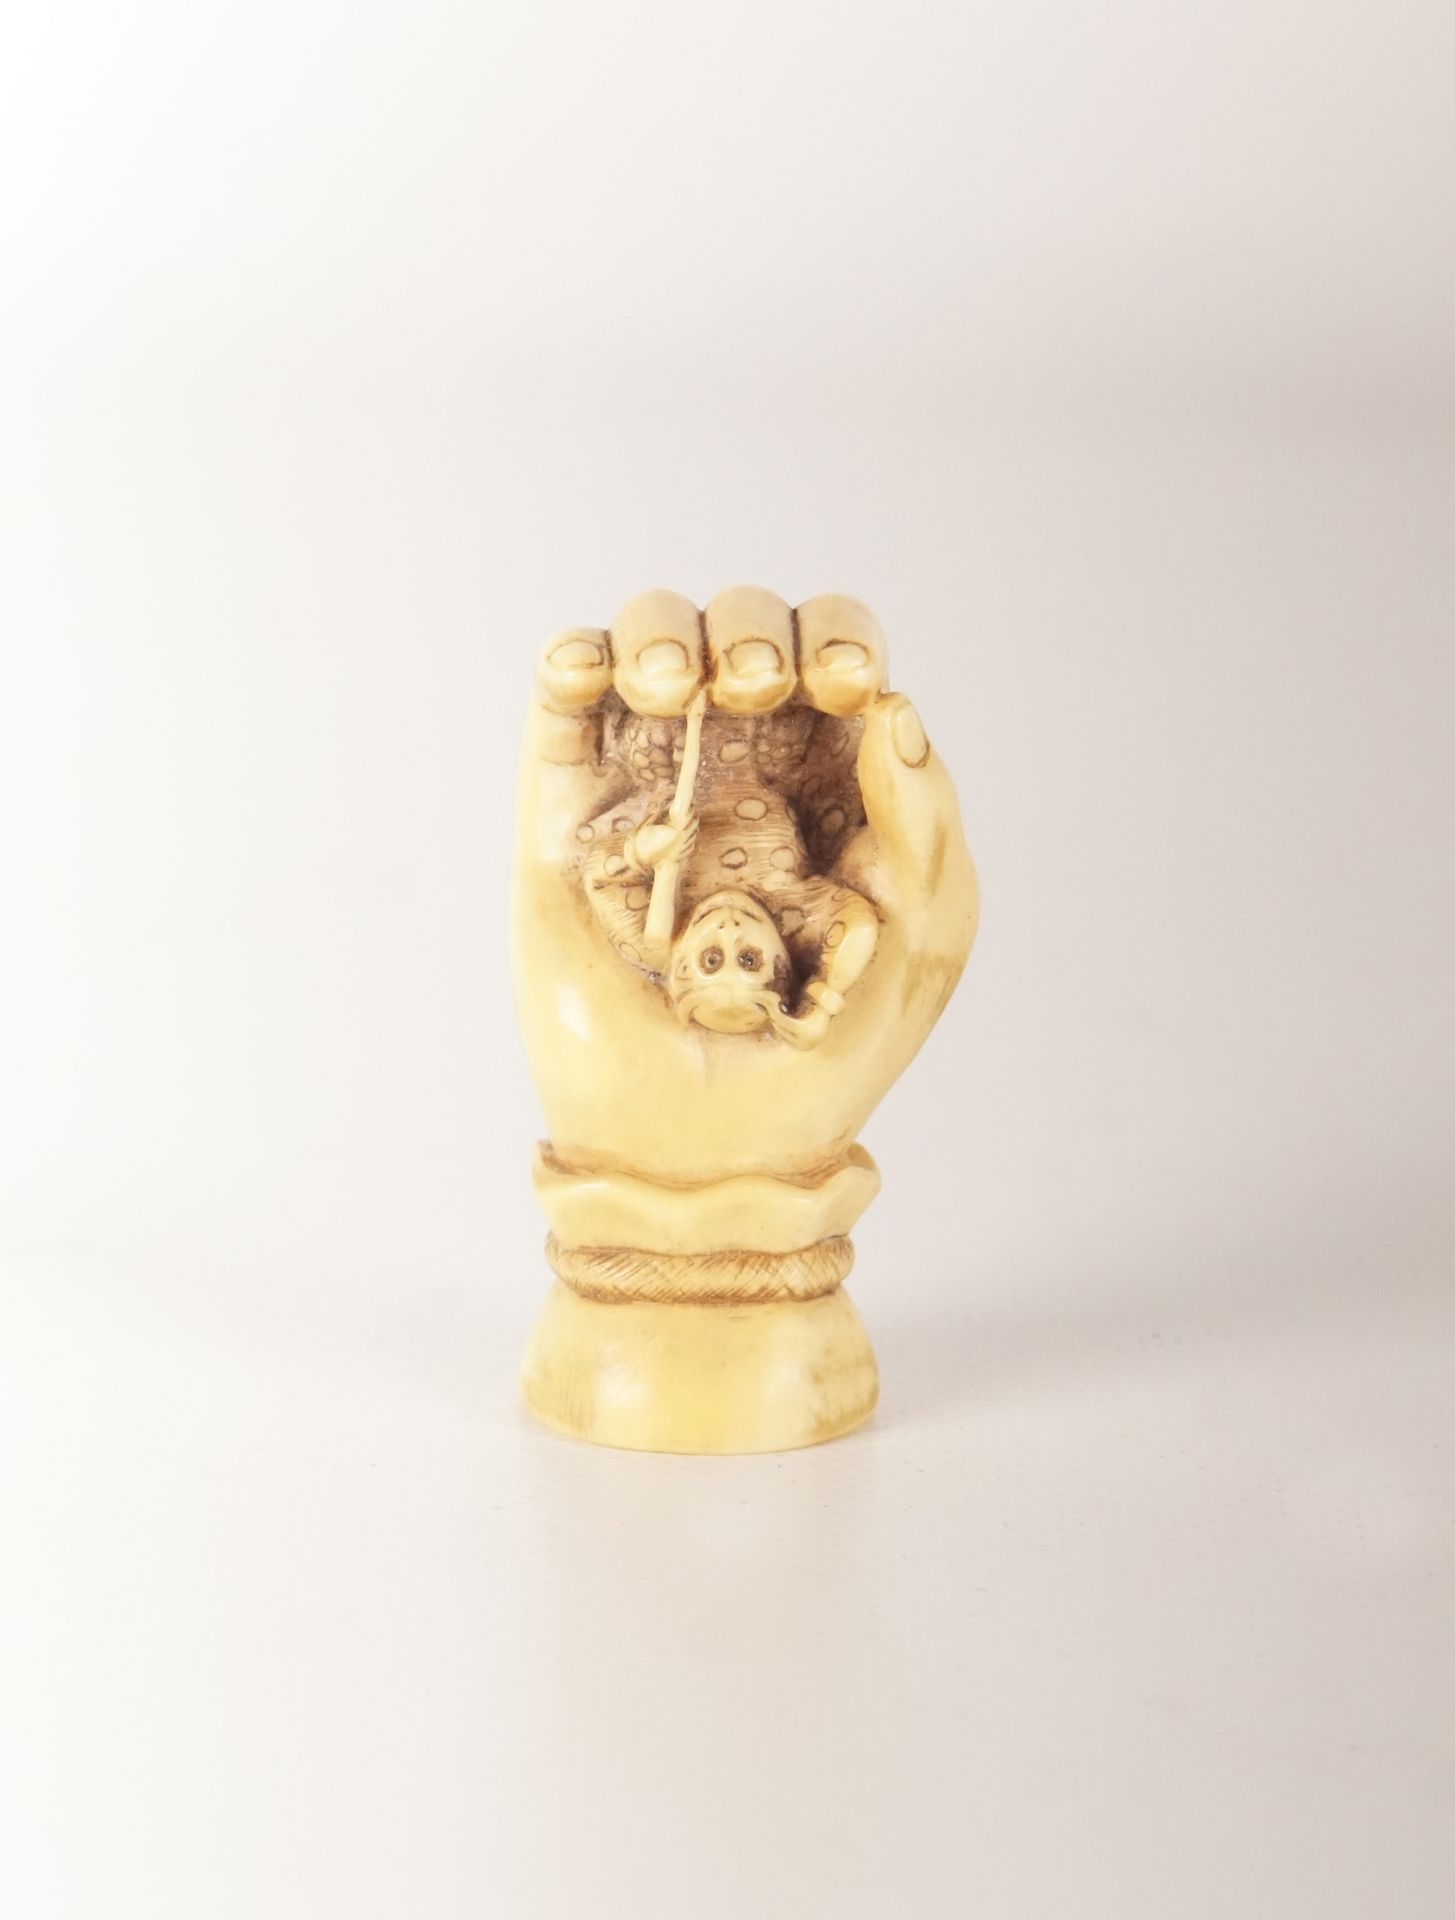 Netsuke - Japon Netsuke en forme de main tenant un singe dans la paume.. 4.9 cm.